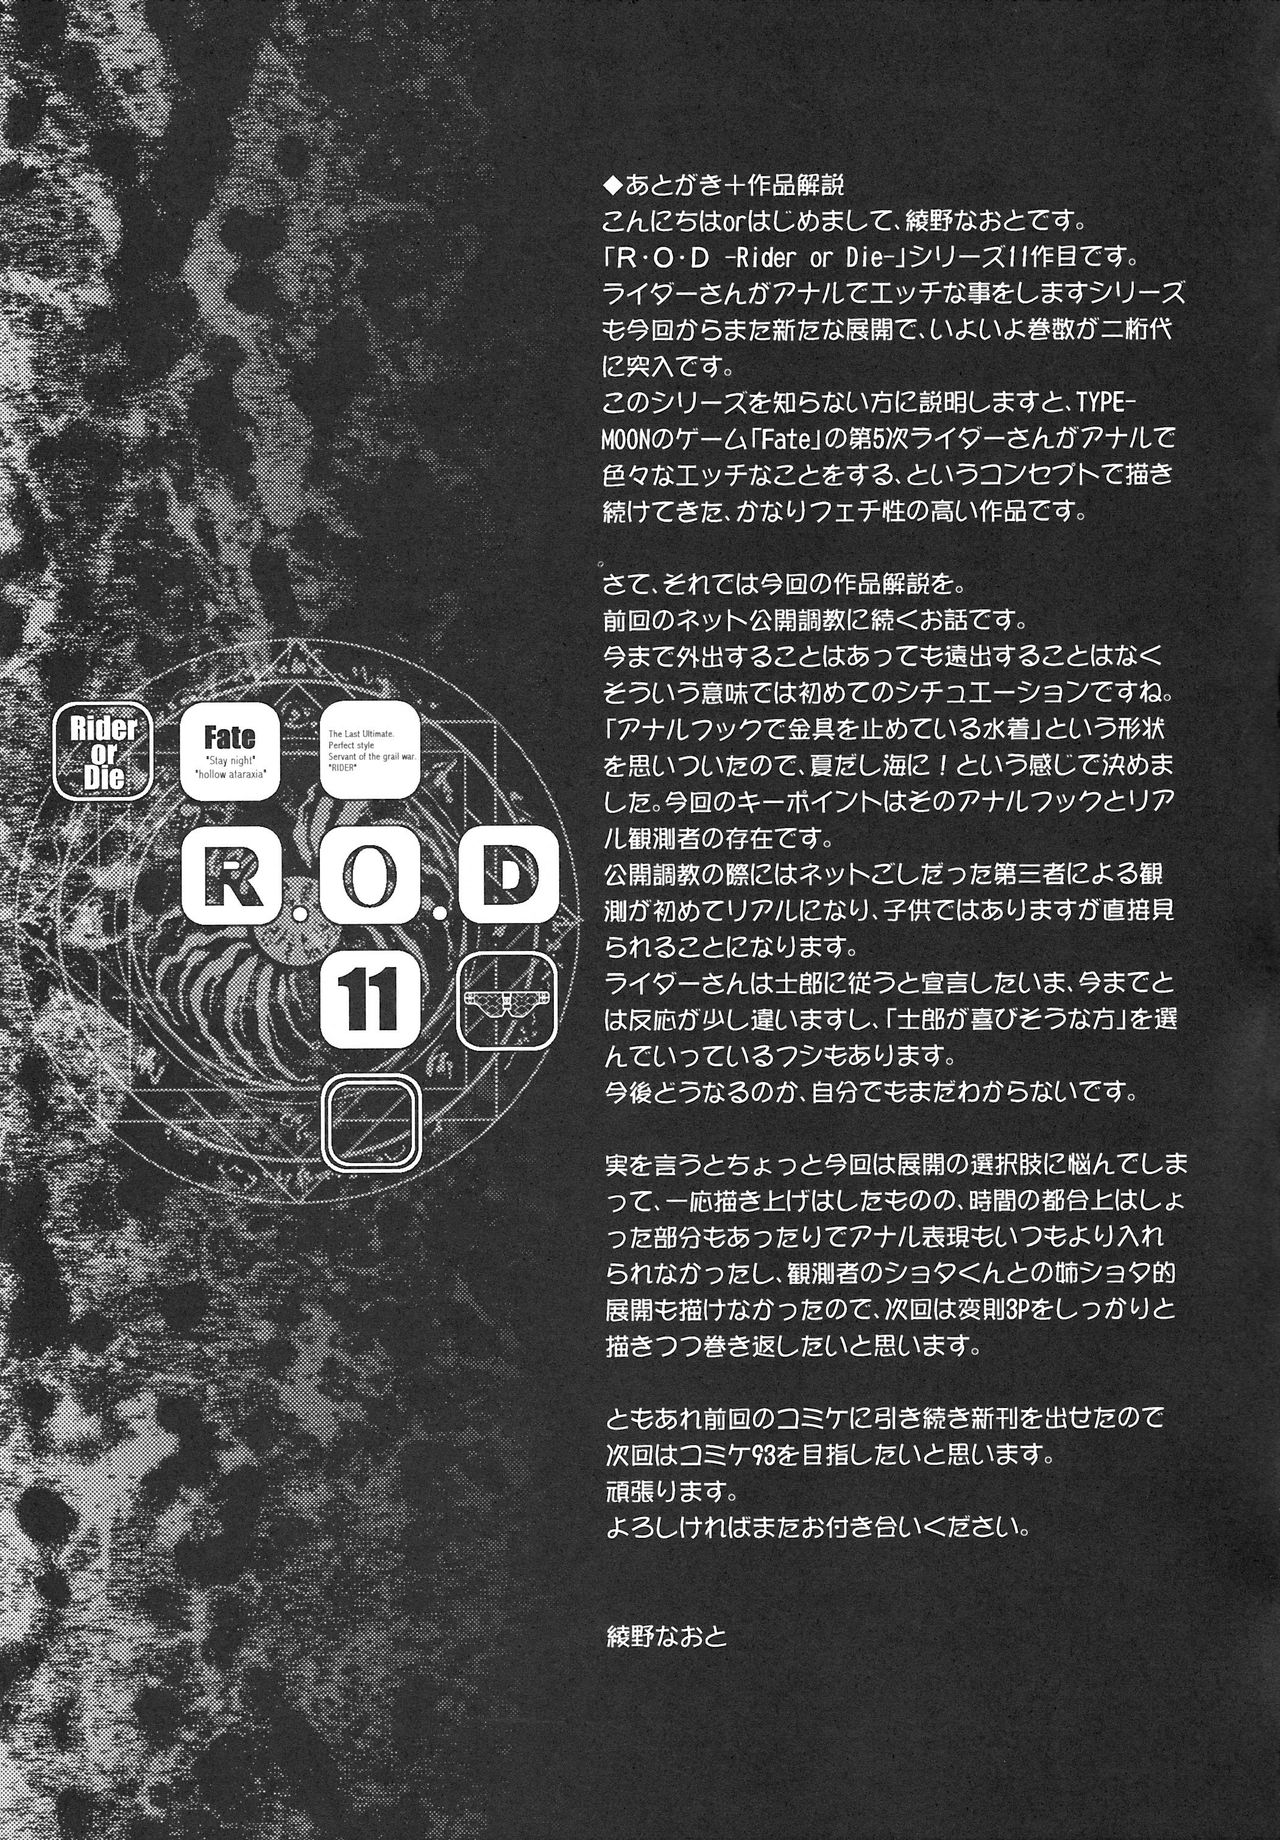 Read C92 [kaiki Nisshoku Ayano Naoto ] R O D 11 Rider Or Die Fate Hollow Ataraxia Hentai